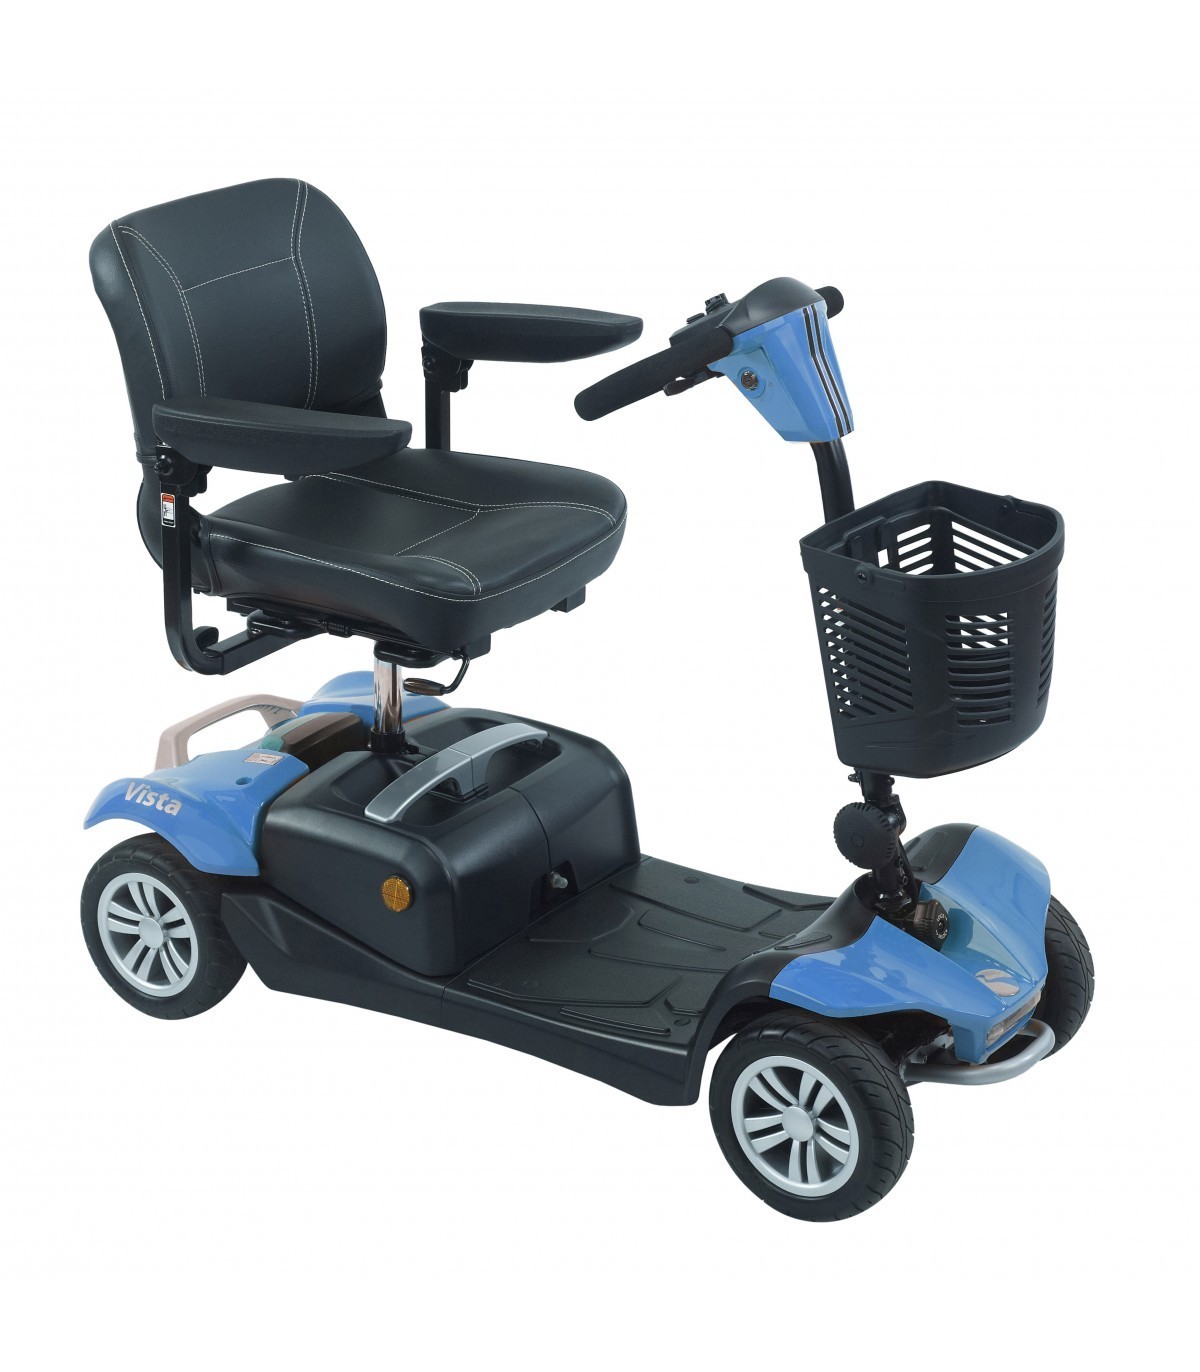 Vista portable medium size mobility scooter